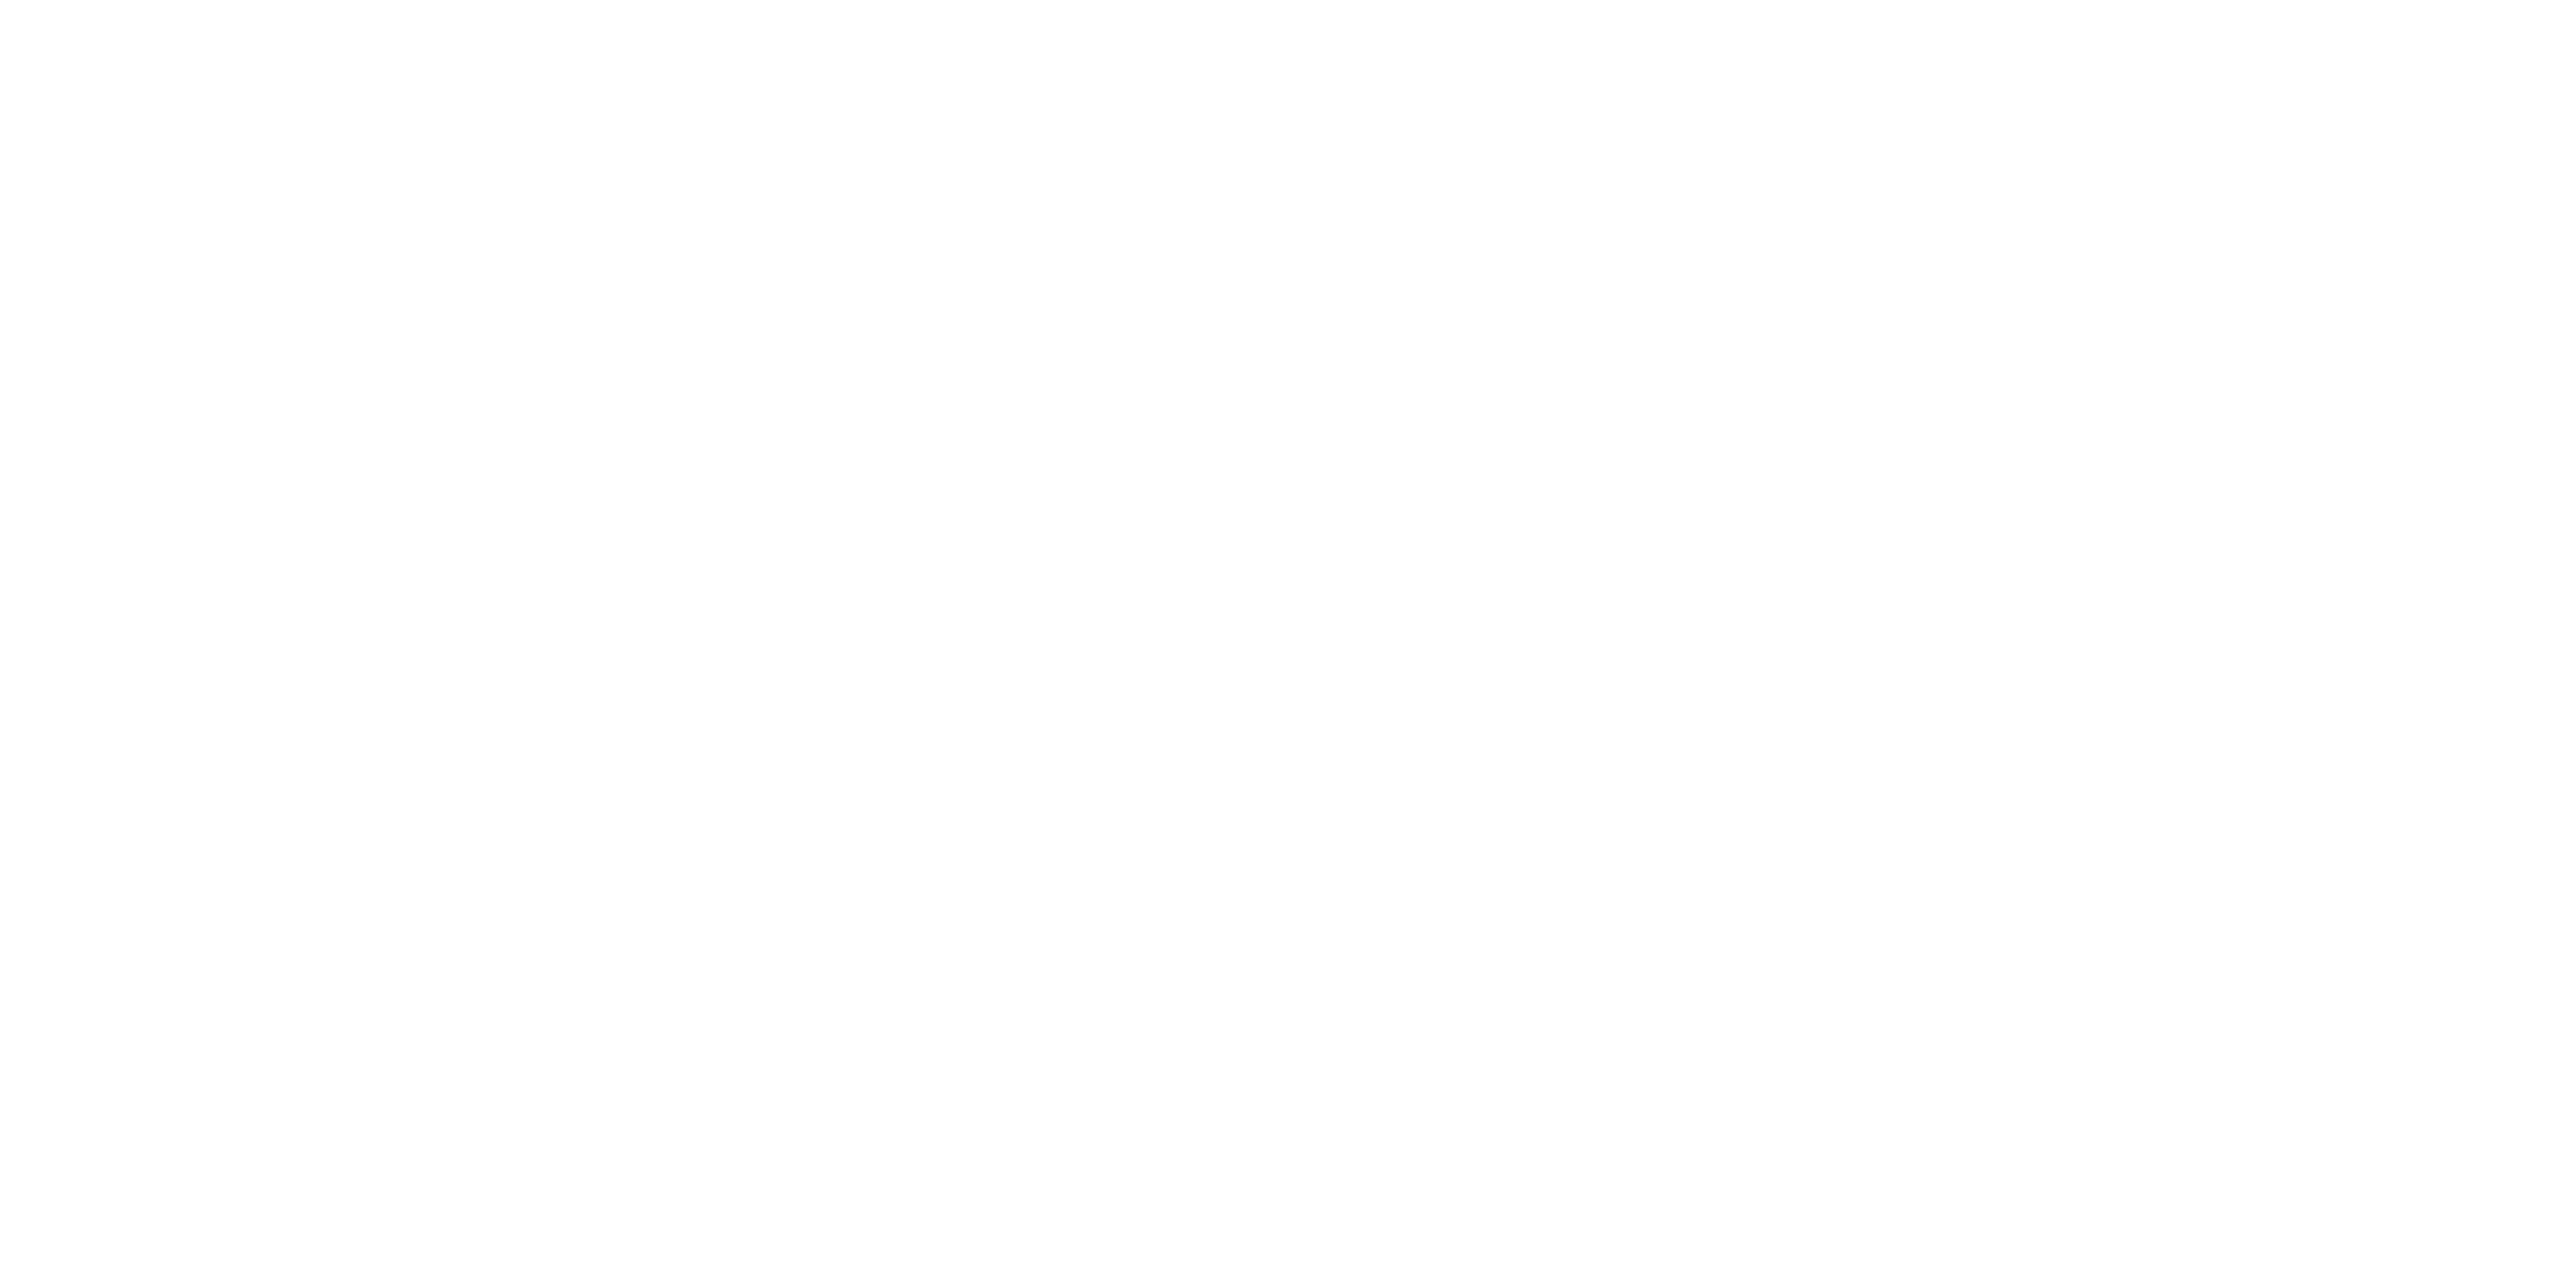 Liberty Finance Solutions